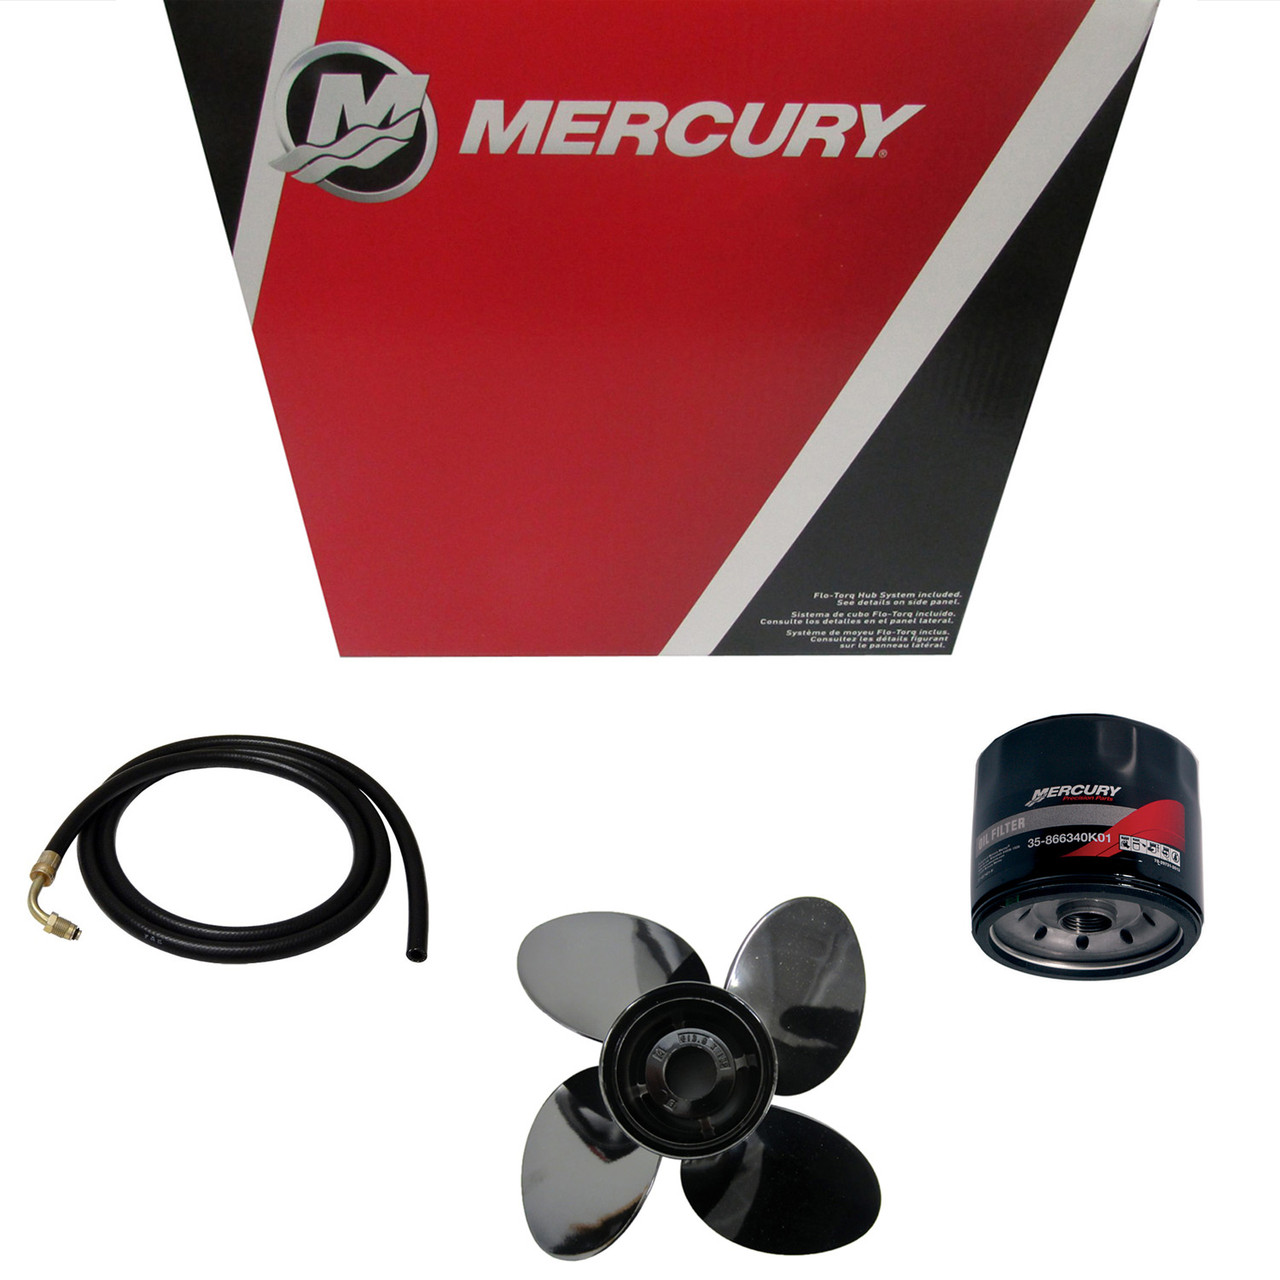 Mercury Marine/Mercruiser New OEM Bearing Kit-Gimbl, 30-879194A03